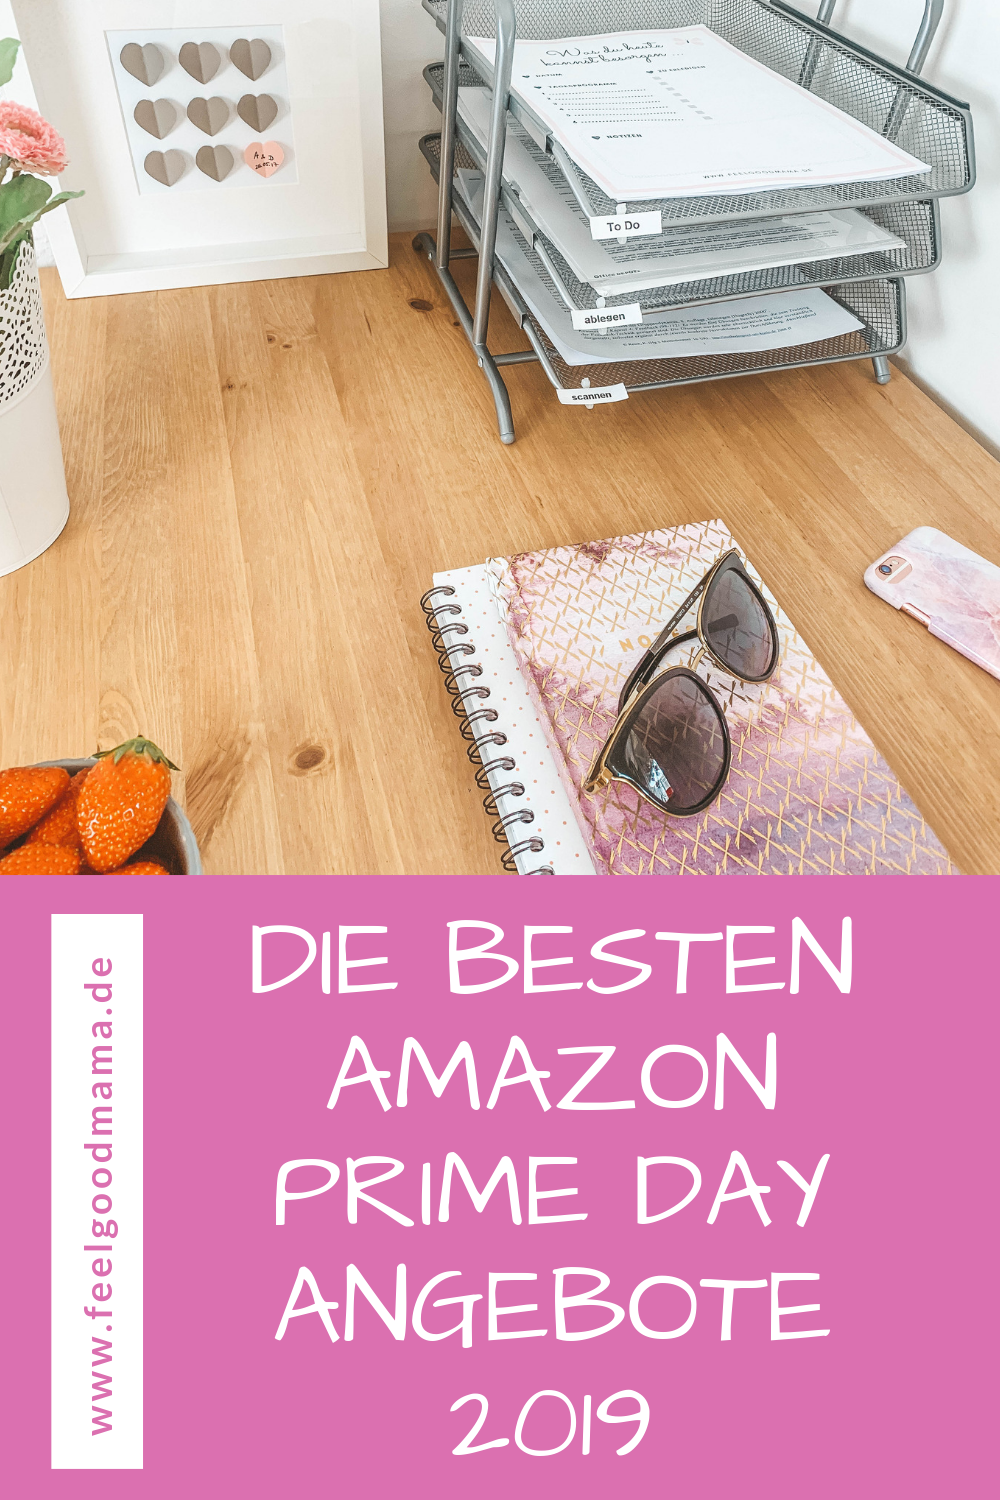 Amazon, Prime, Amazon Prime Day, Schnäppchen, Haushalt, Rabatt, günstig